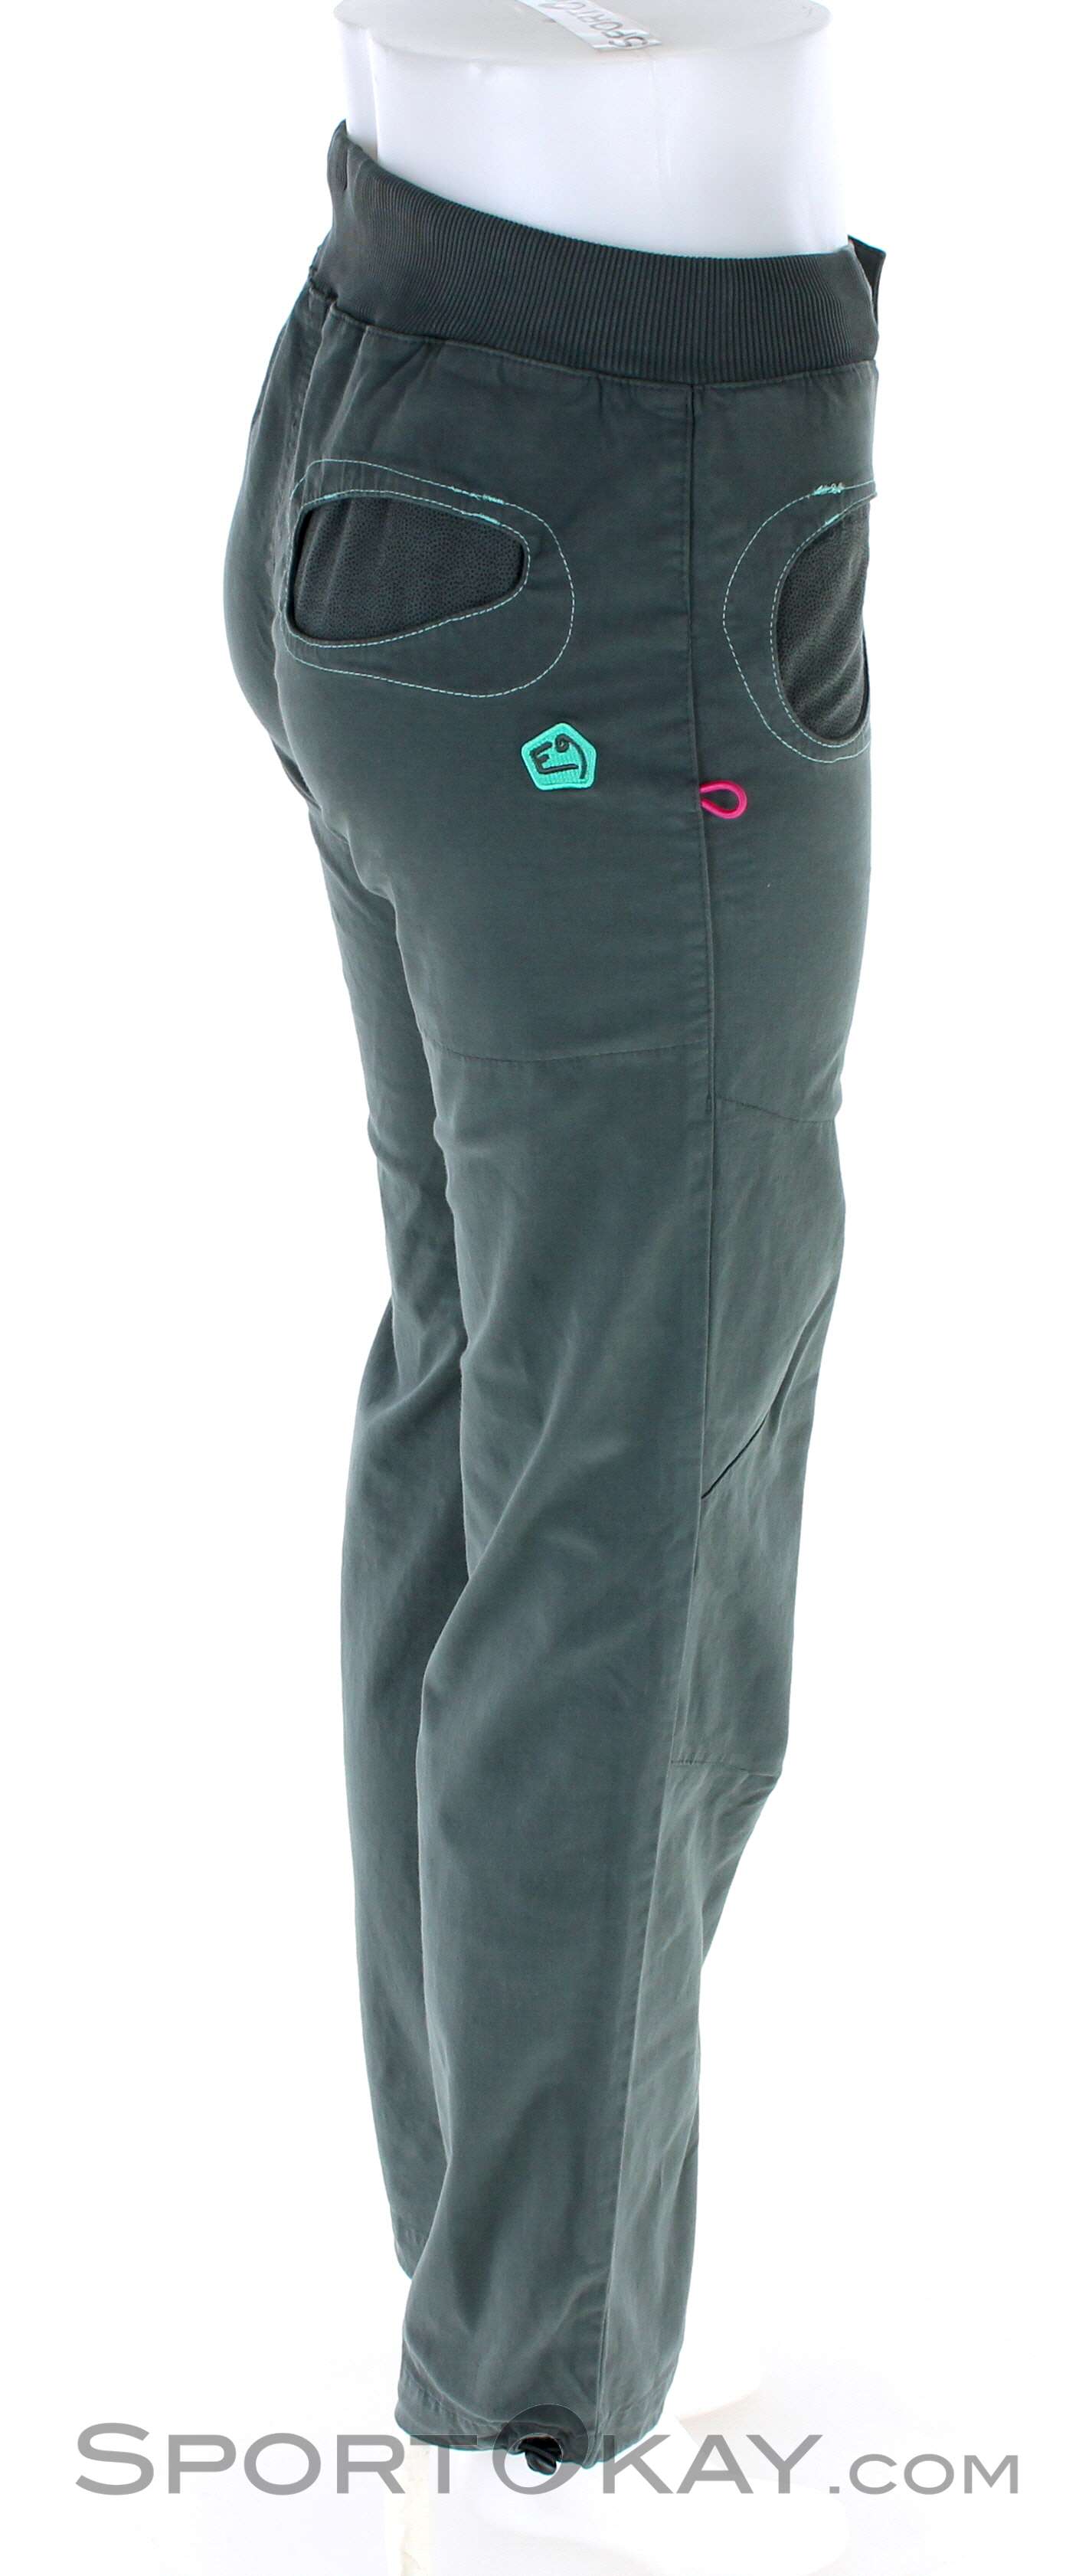 E9 Onda Slim 2 Womens Climbing Pants - Pants - Climbing Clothing